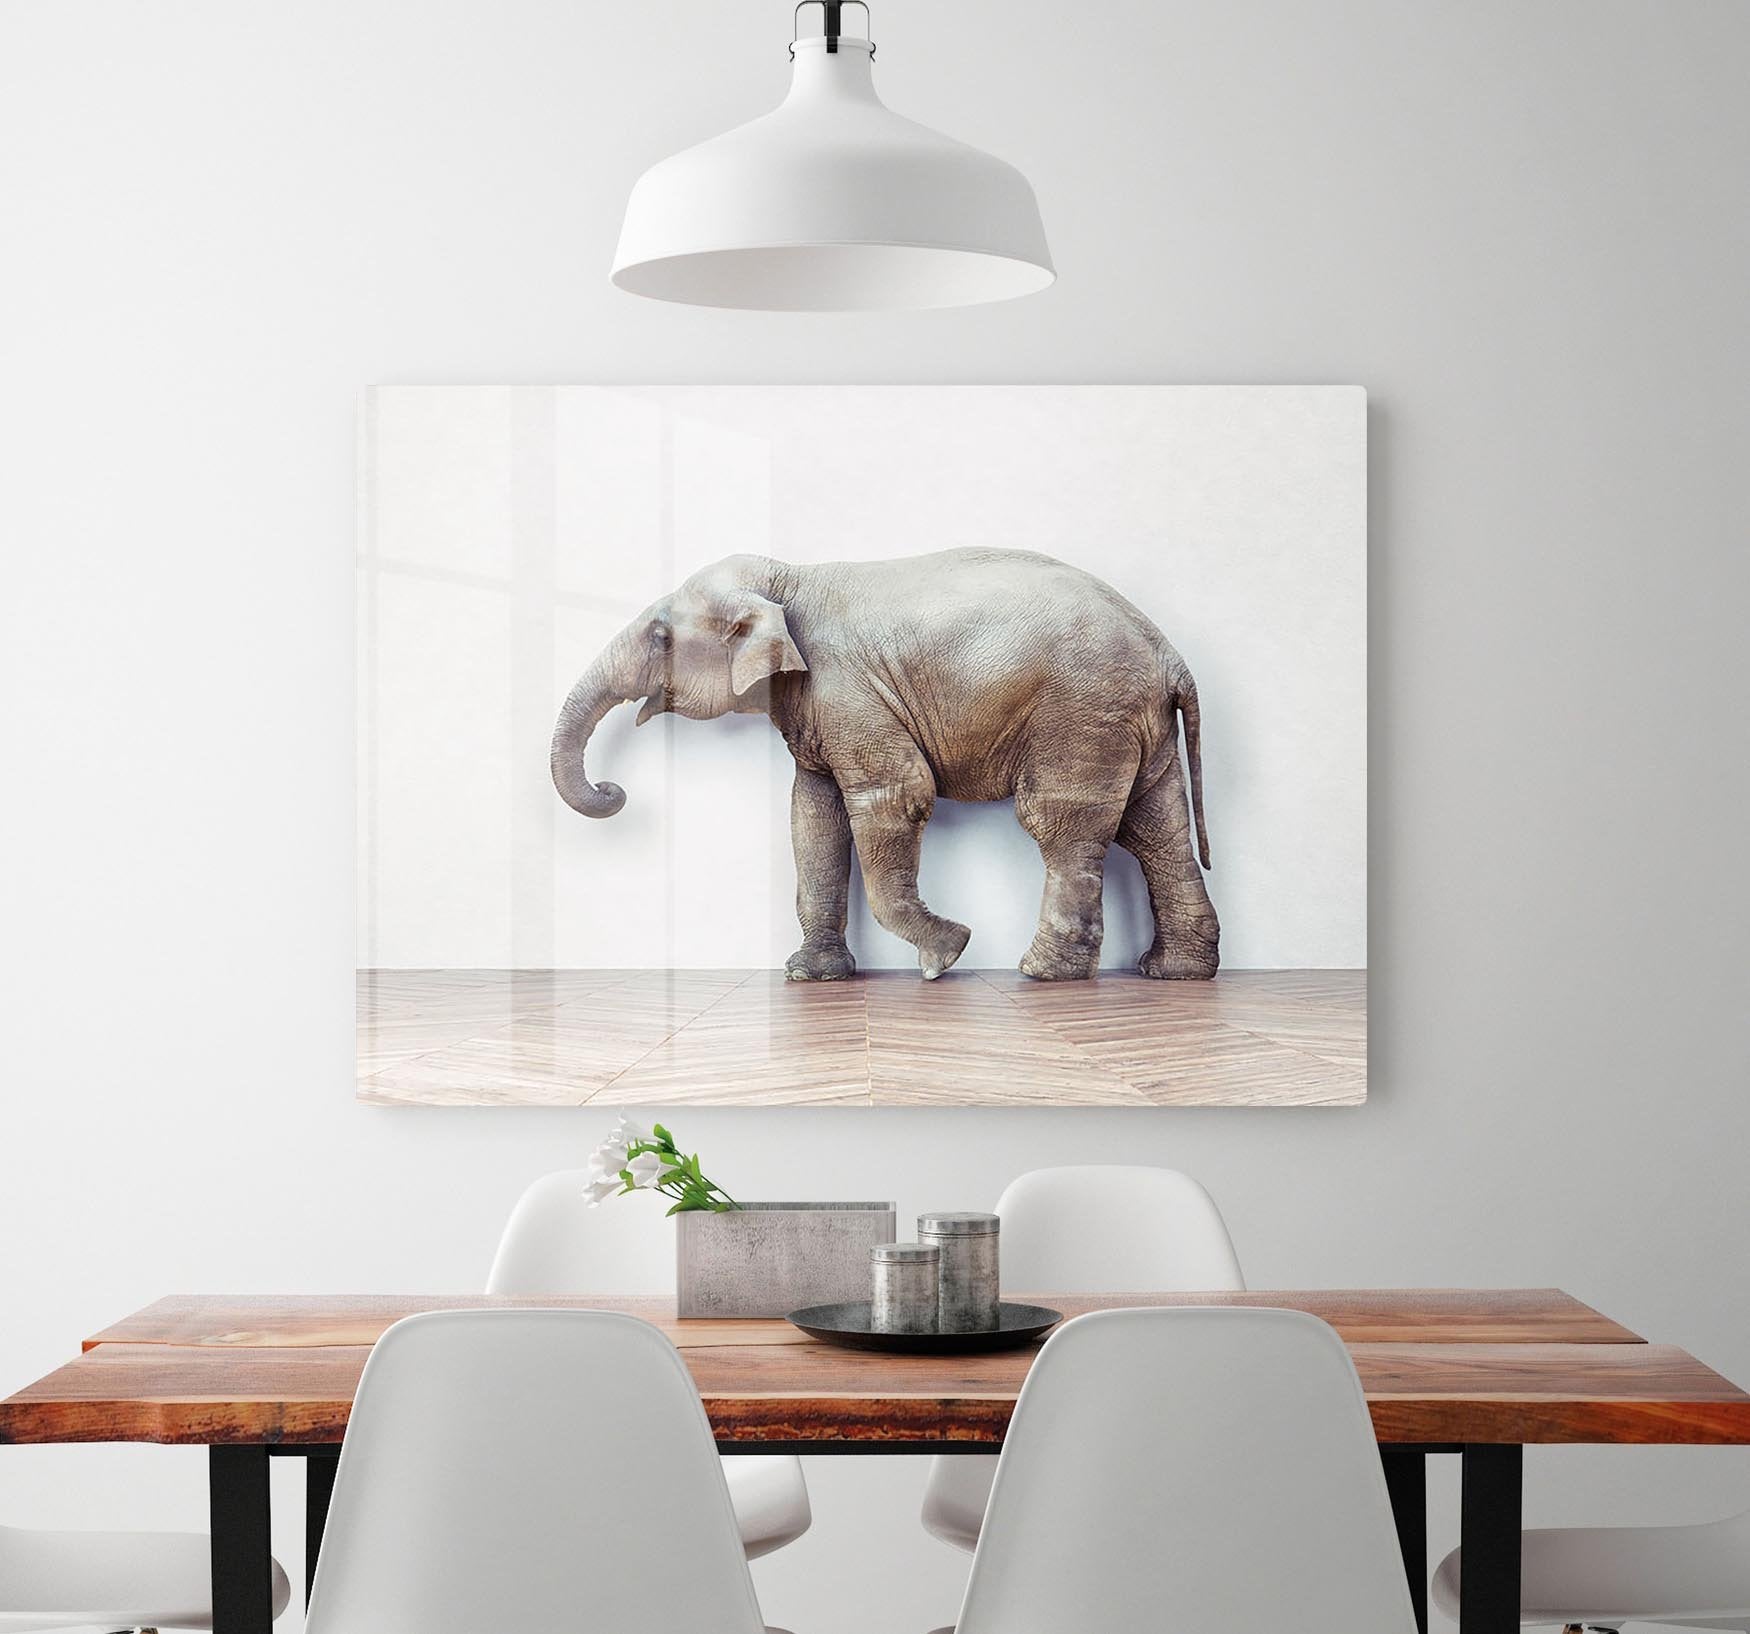 The elephant calm in the room near white wall HD Metal Print - Canvas Art Rocks - 2